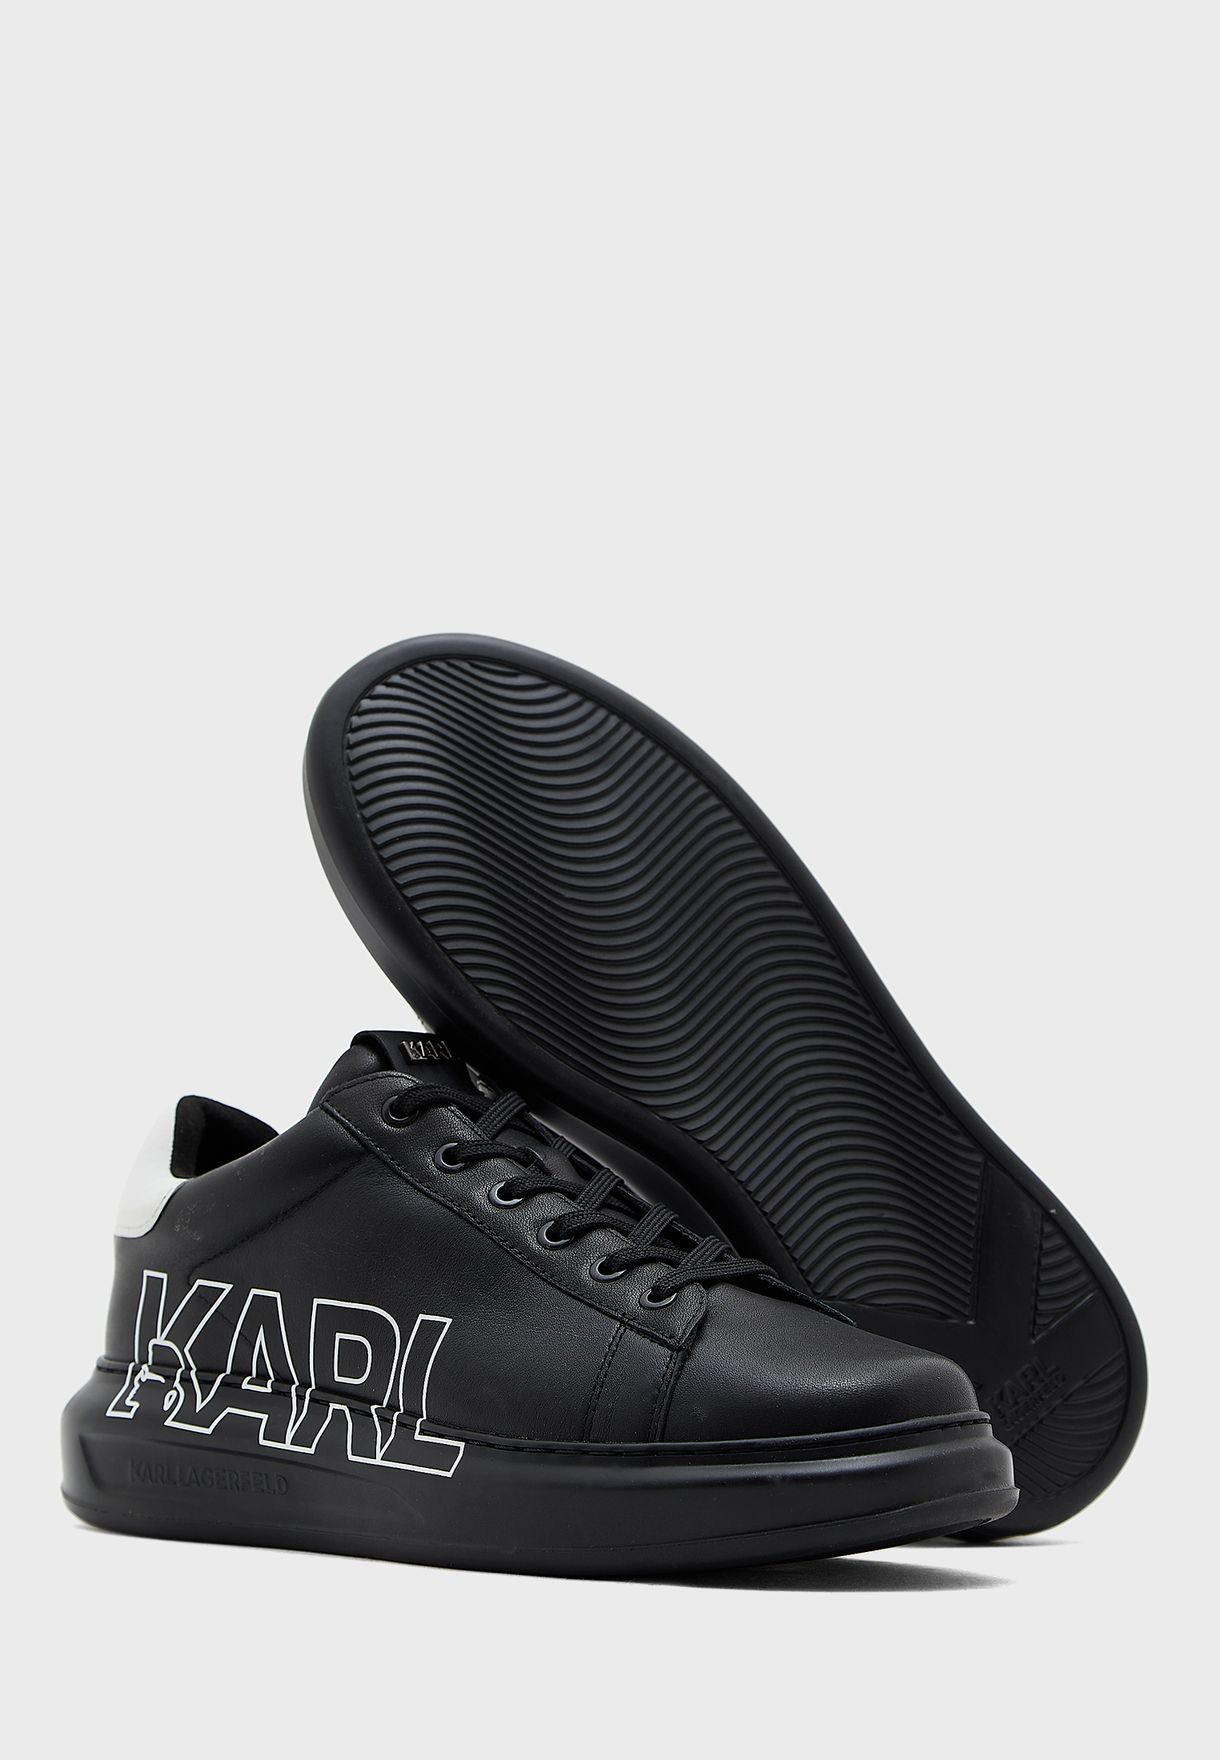 Kapri Lace Up Low Top Sneakers